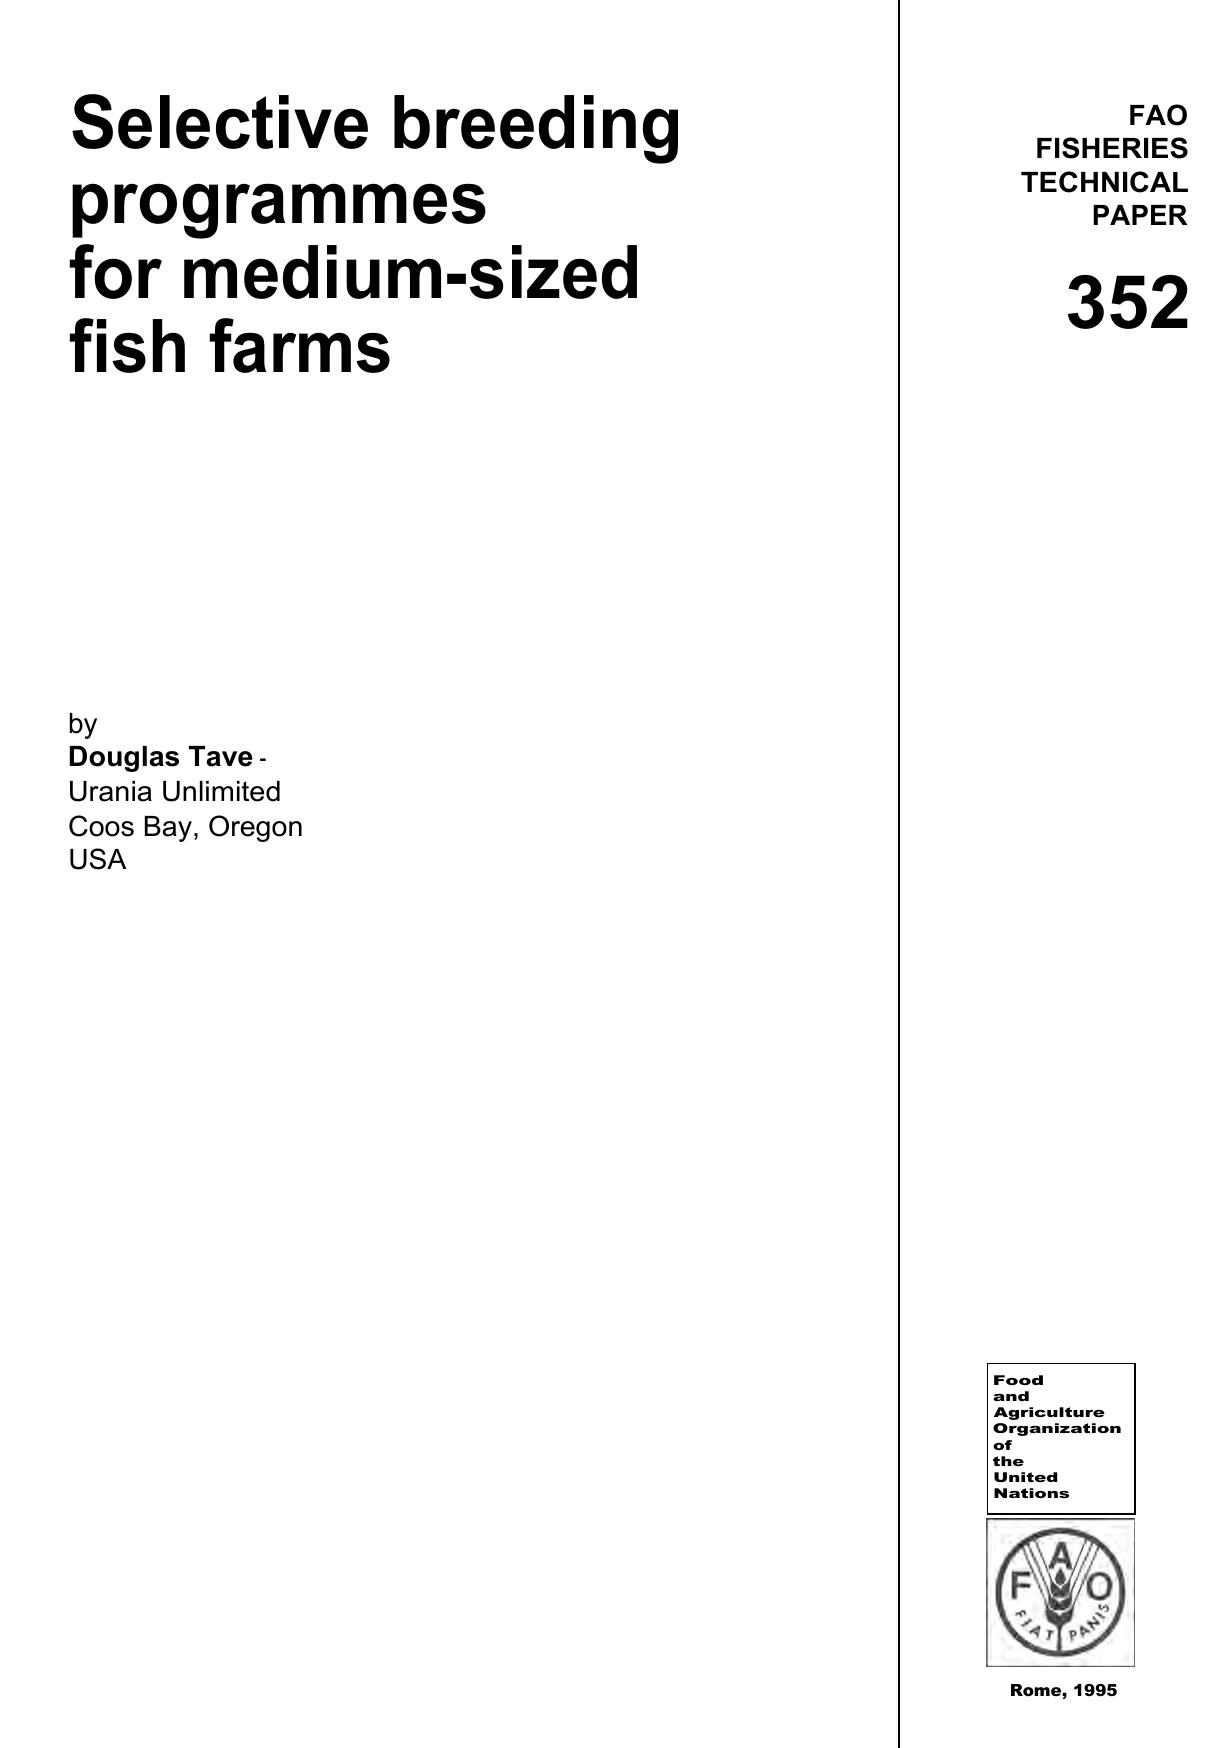 Selective Breeding process for medium sized fish farm 1995